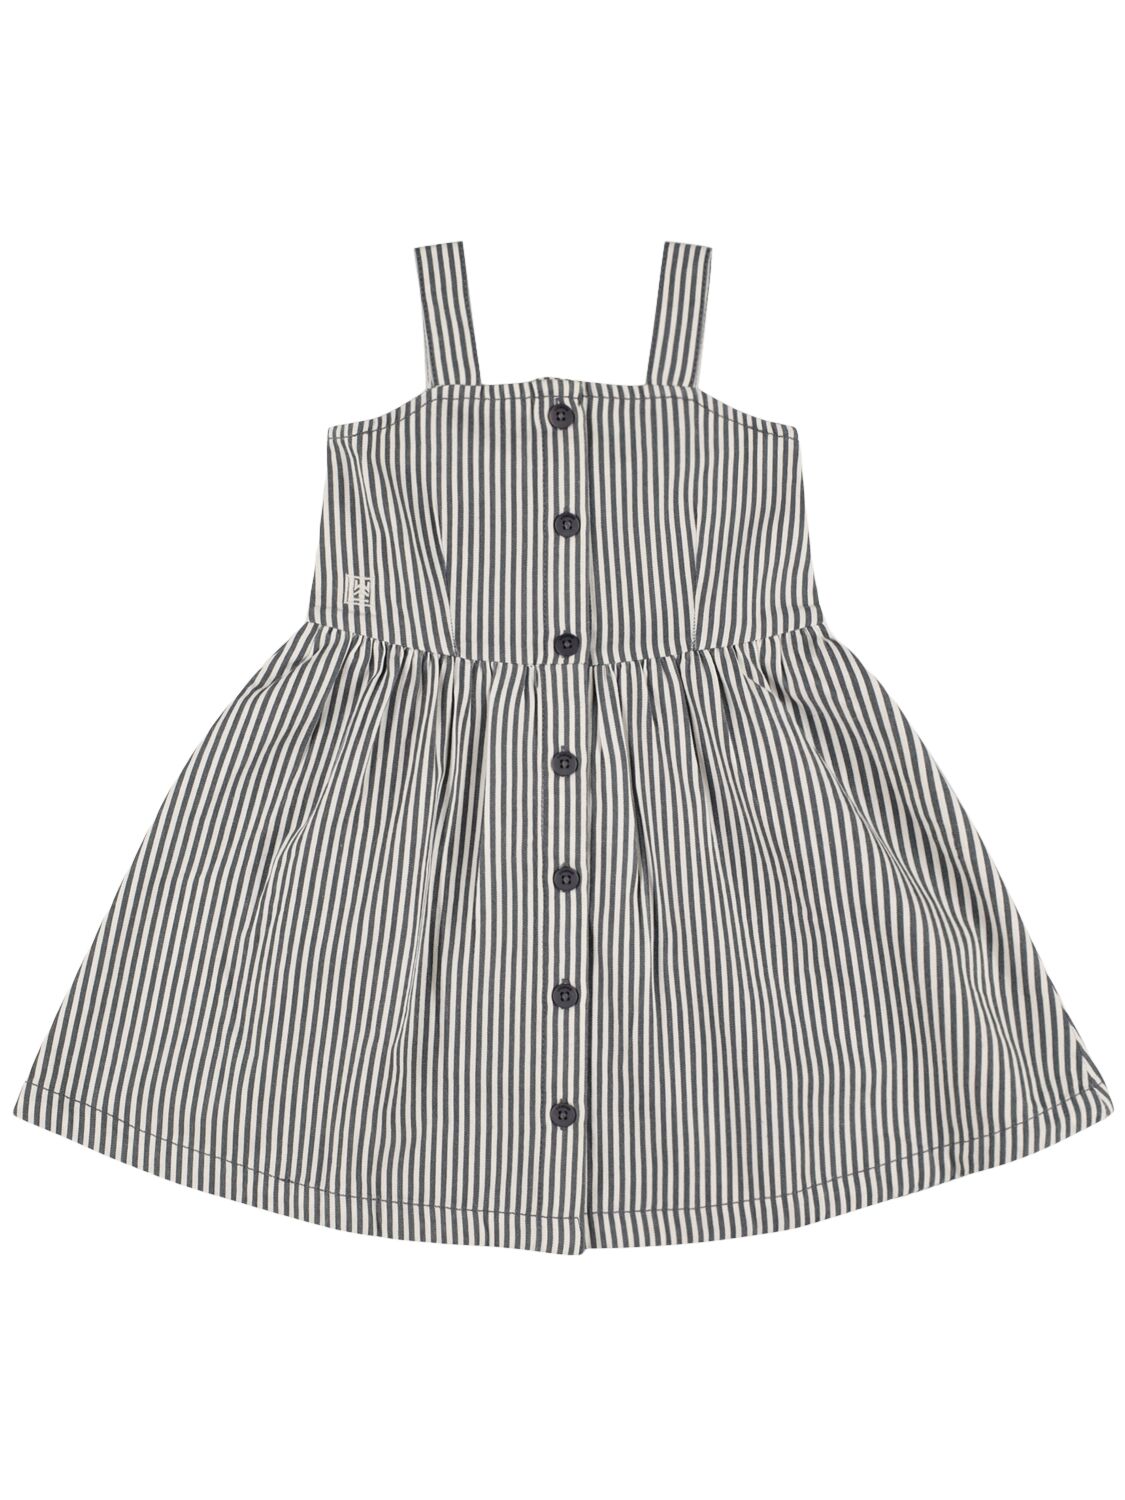 Liewood Kids' Organic Cotton Dress In Cream,navy